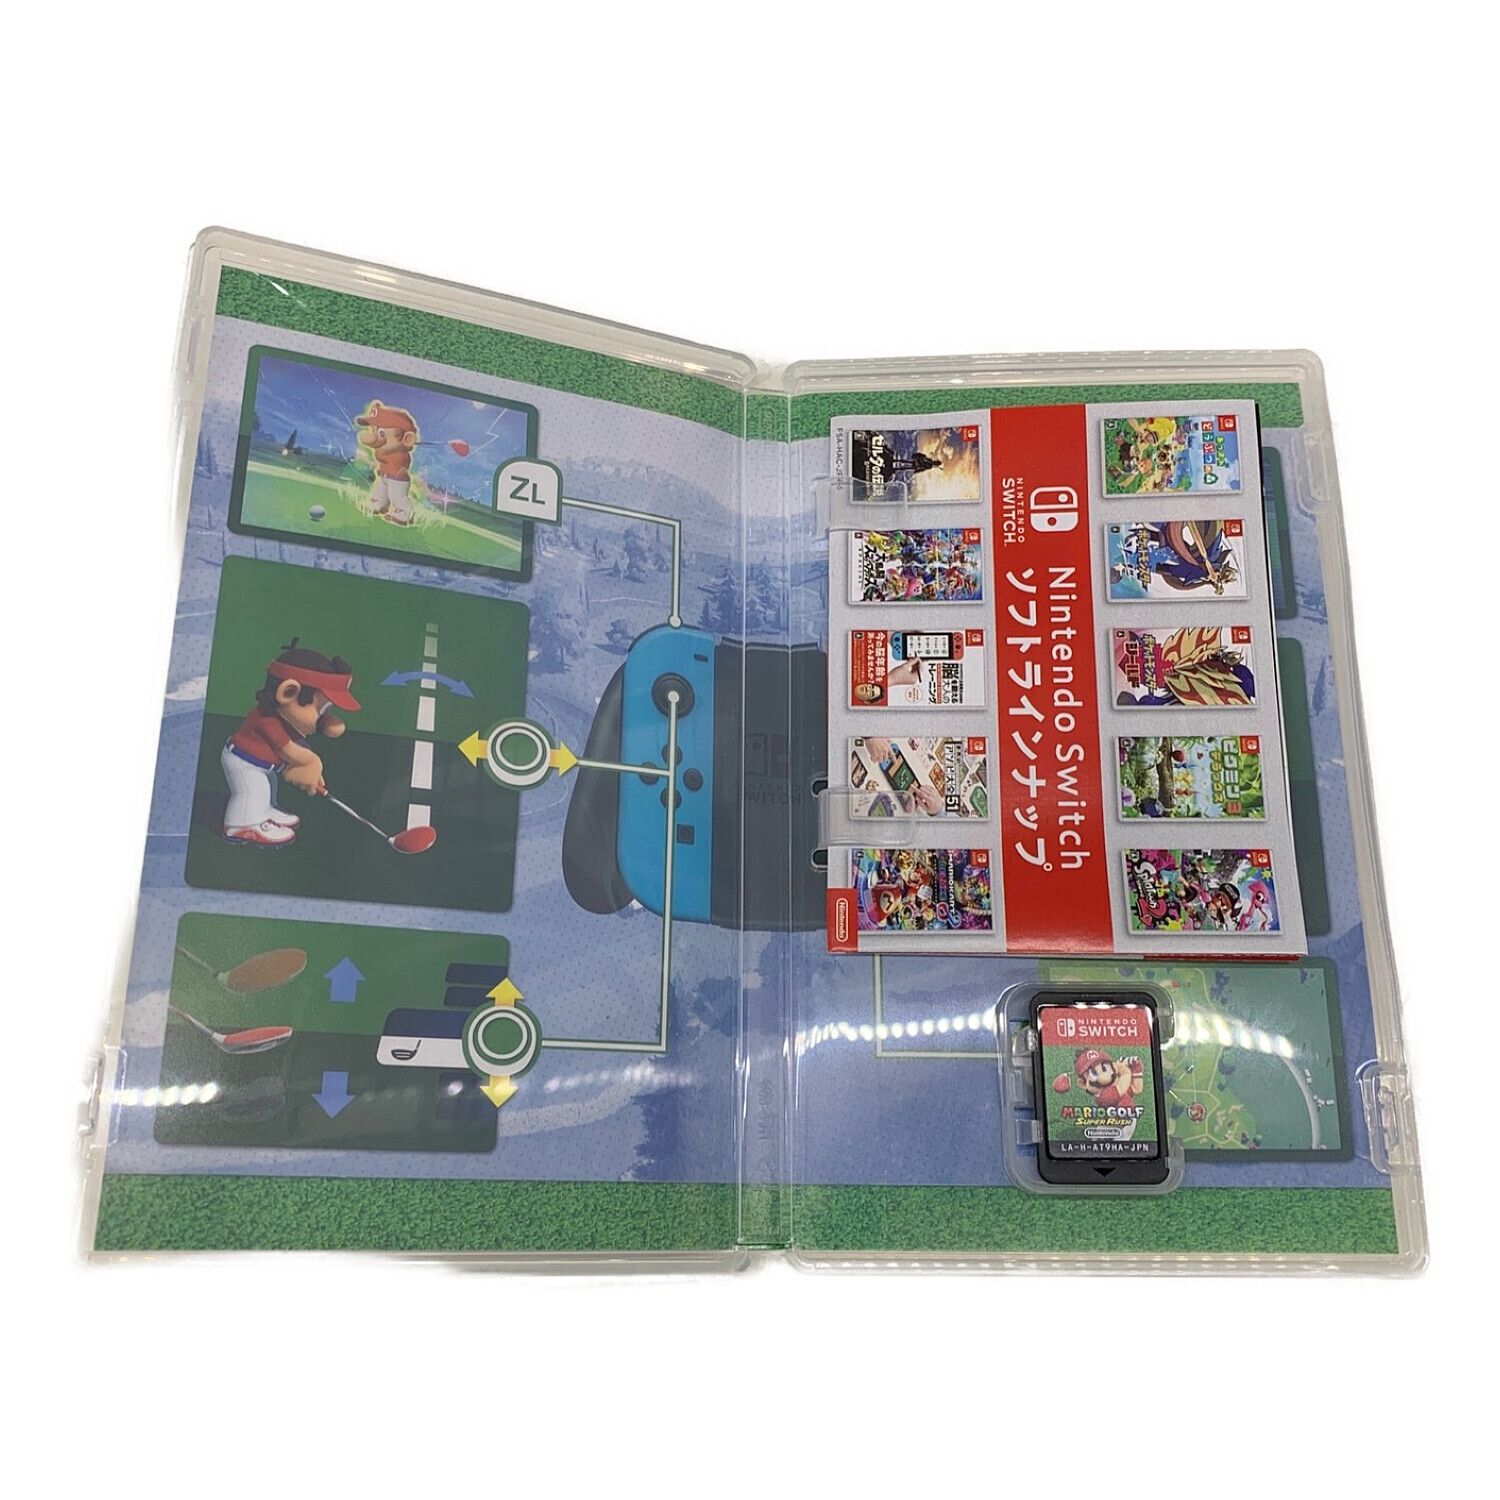 Nintendo Switch用ソフト マリオゴルフスーパーラッシュ CERO A (全 